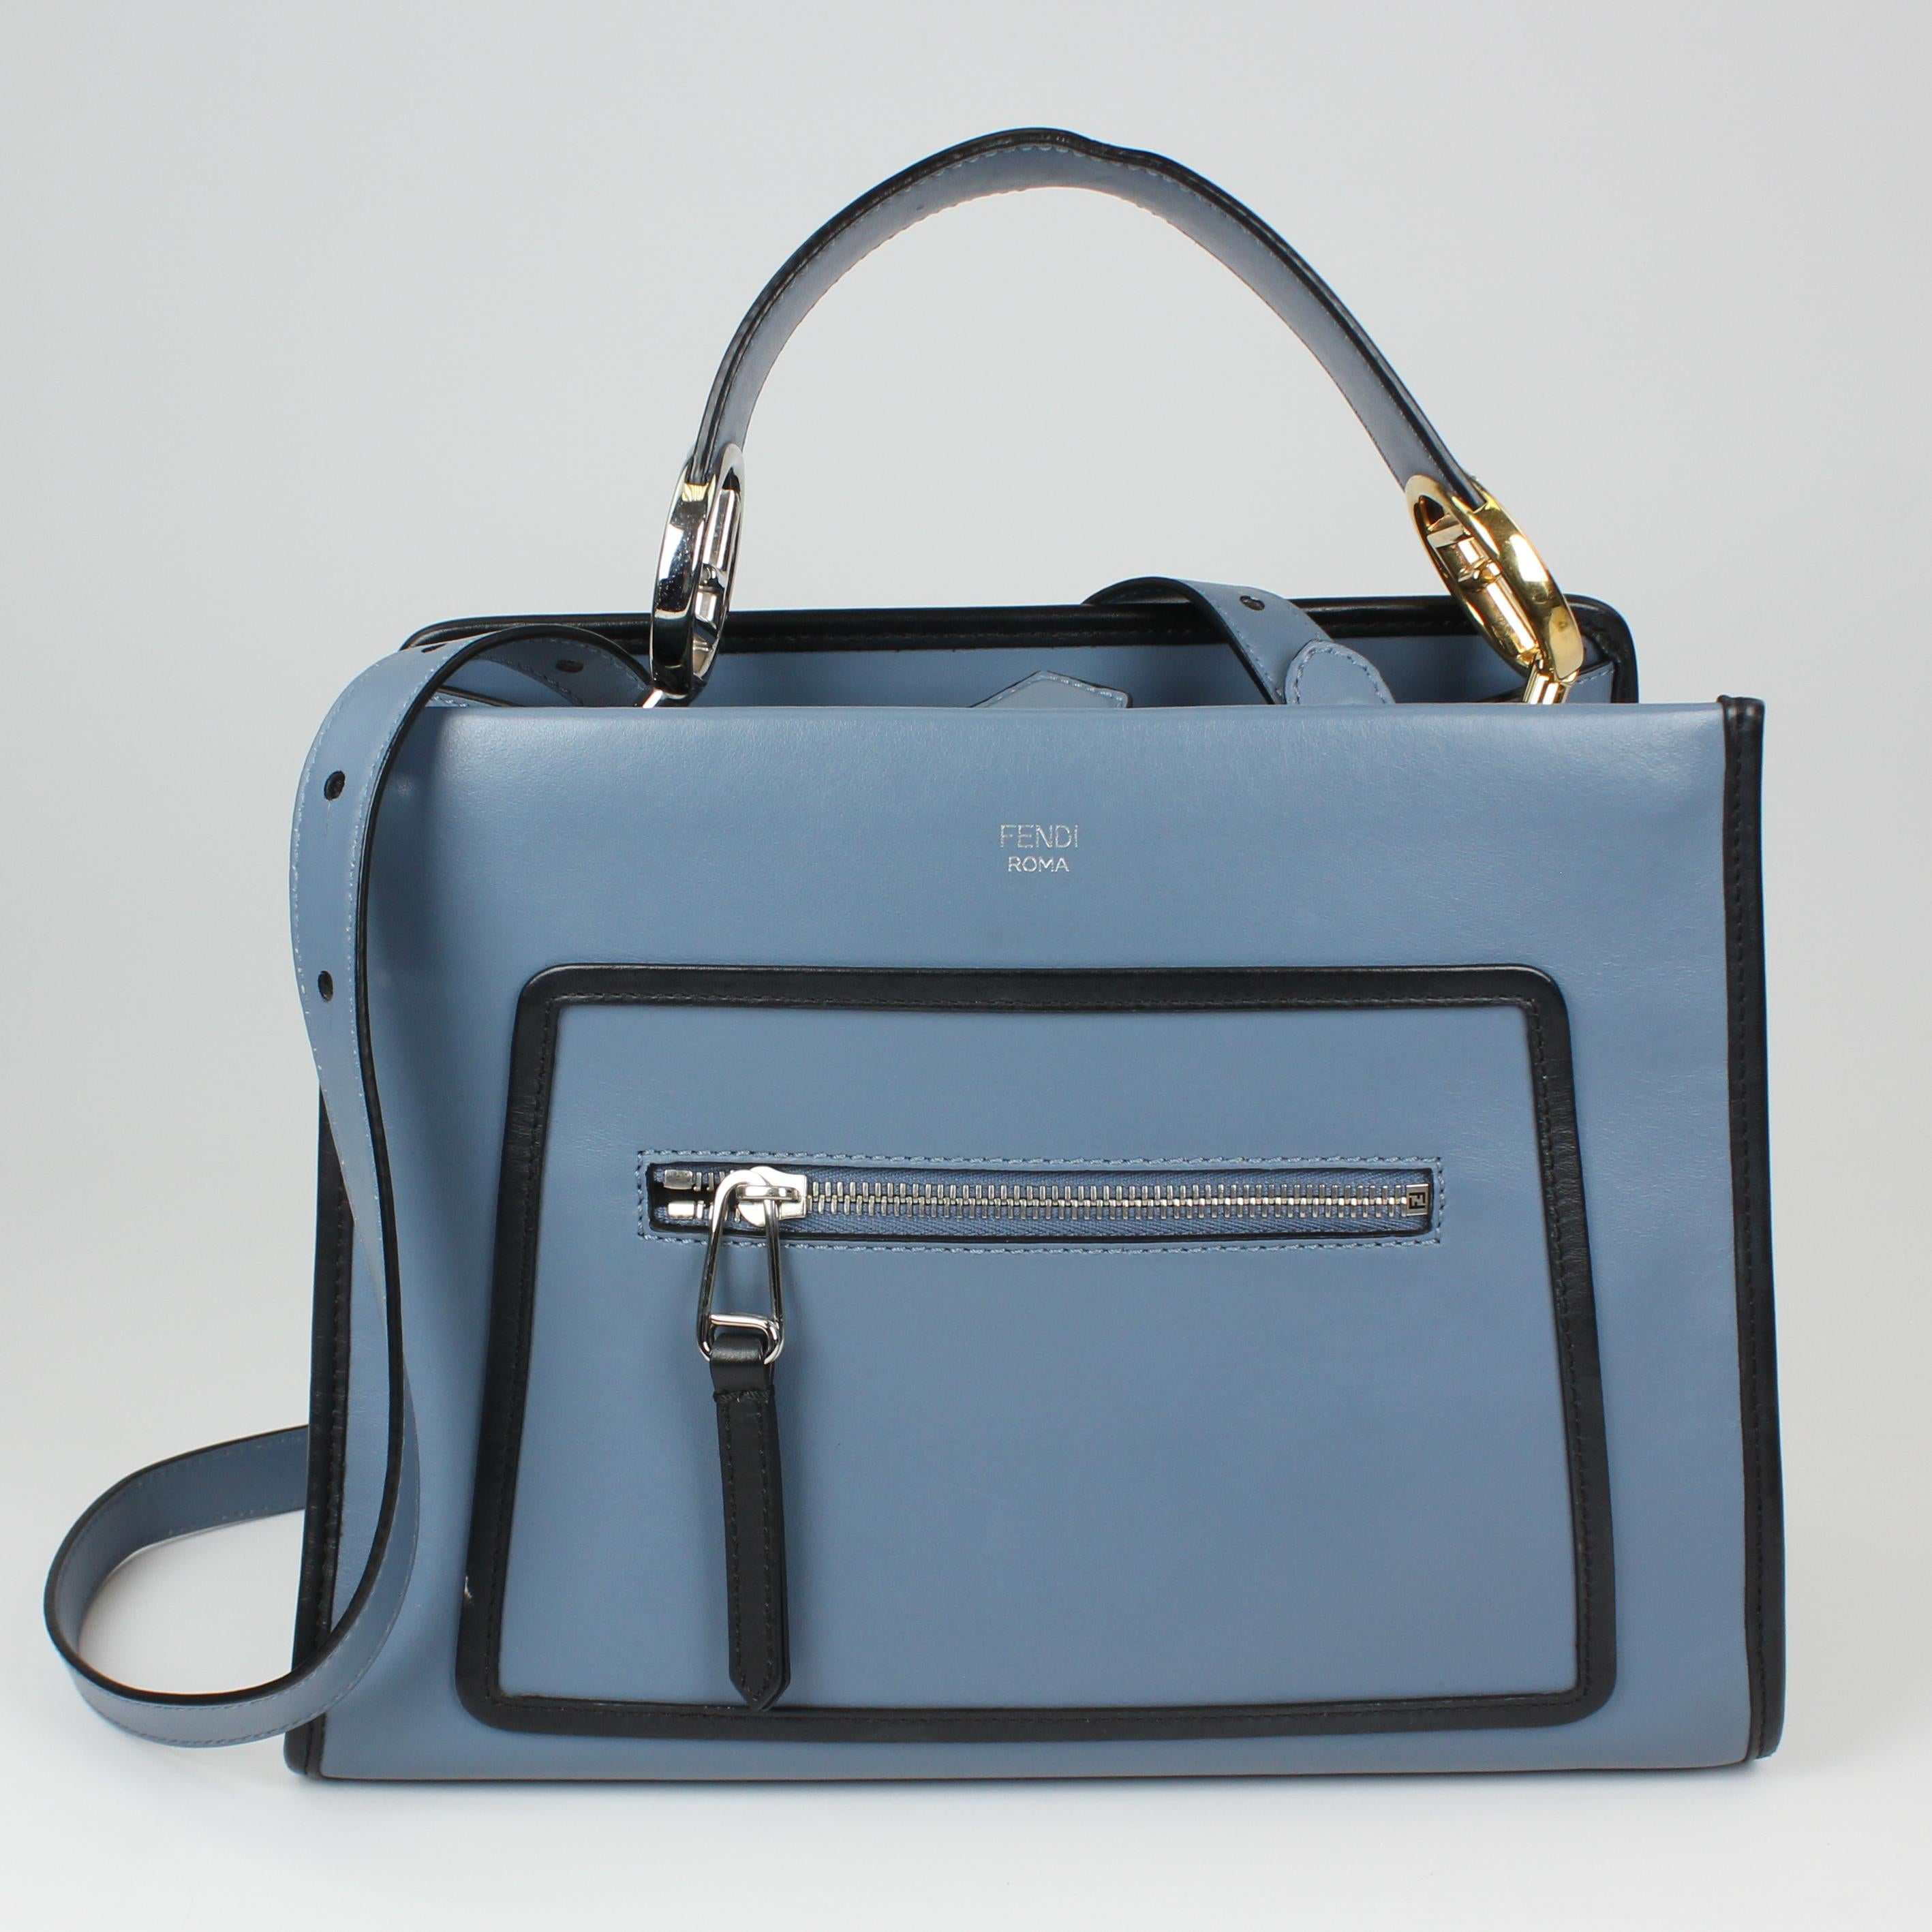 Fendi Runaway Handbag in Leather 2